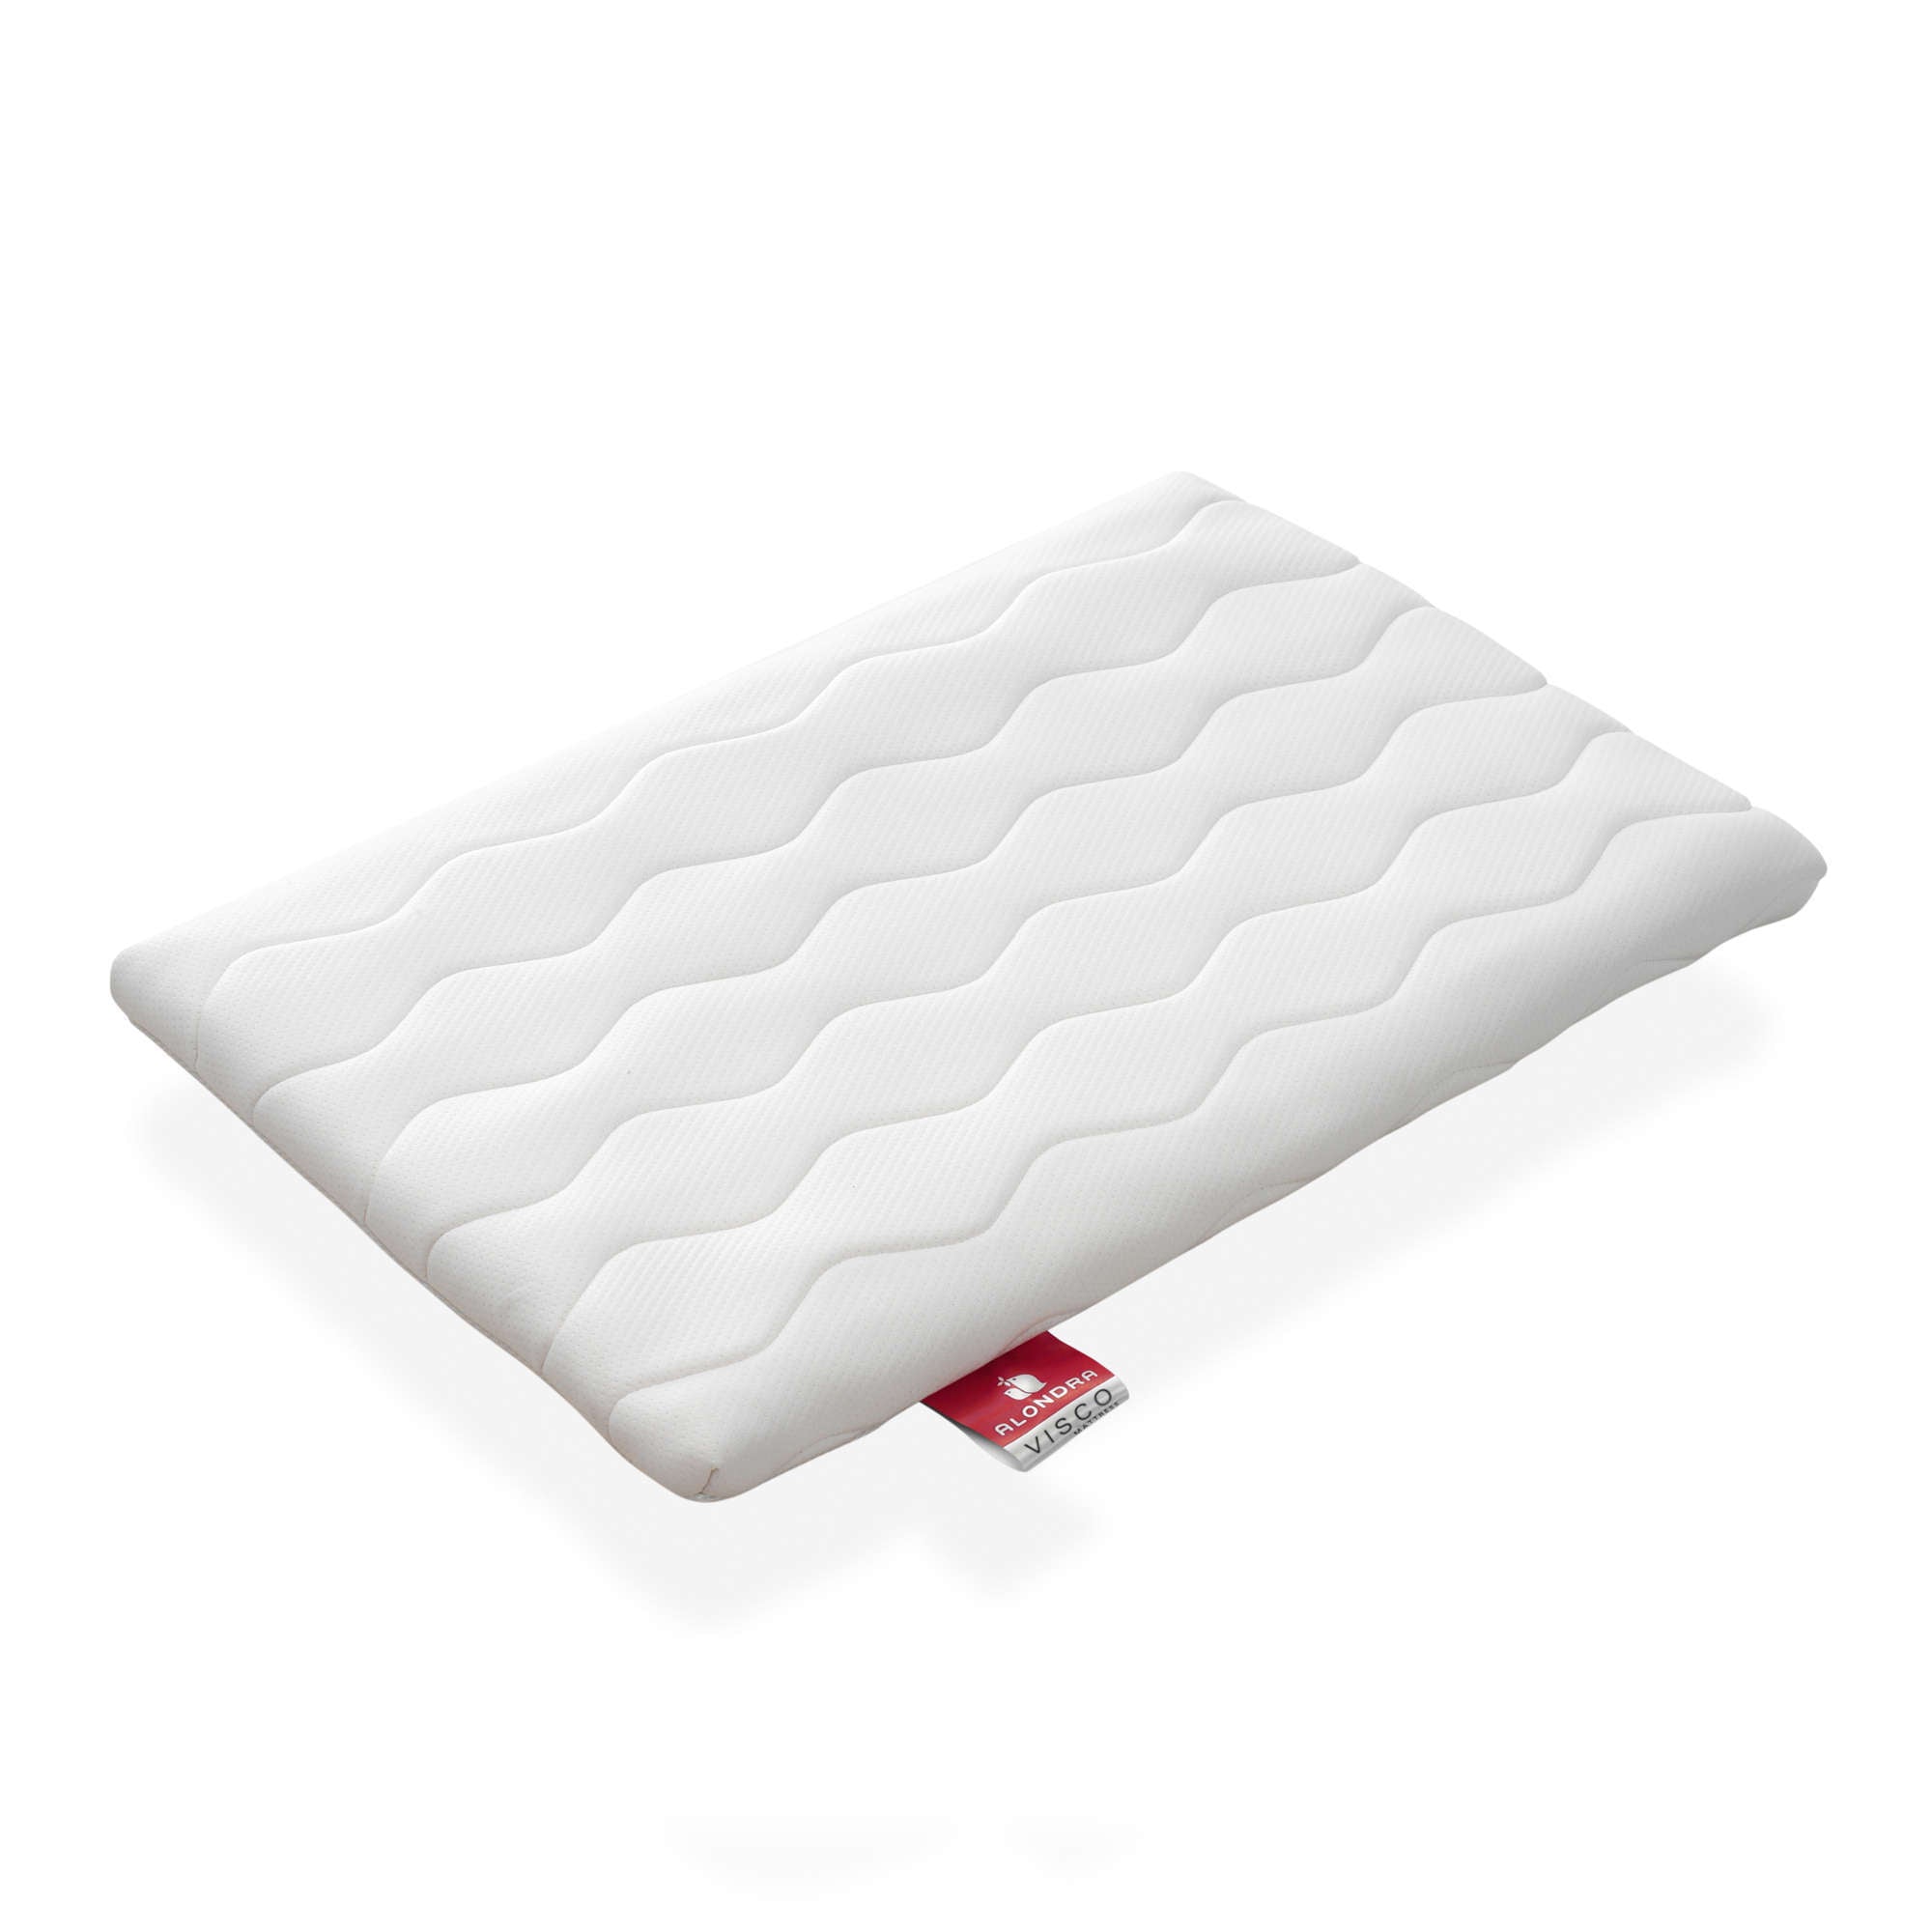 Catalogue of mattresses for co-sleeping cribs 50x80 Alondra